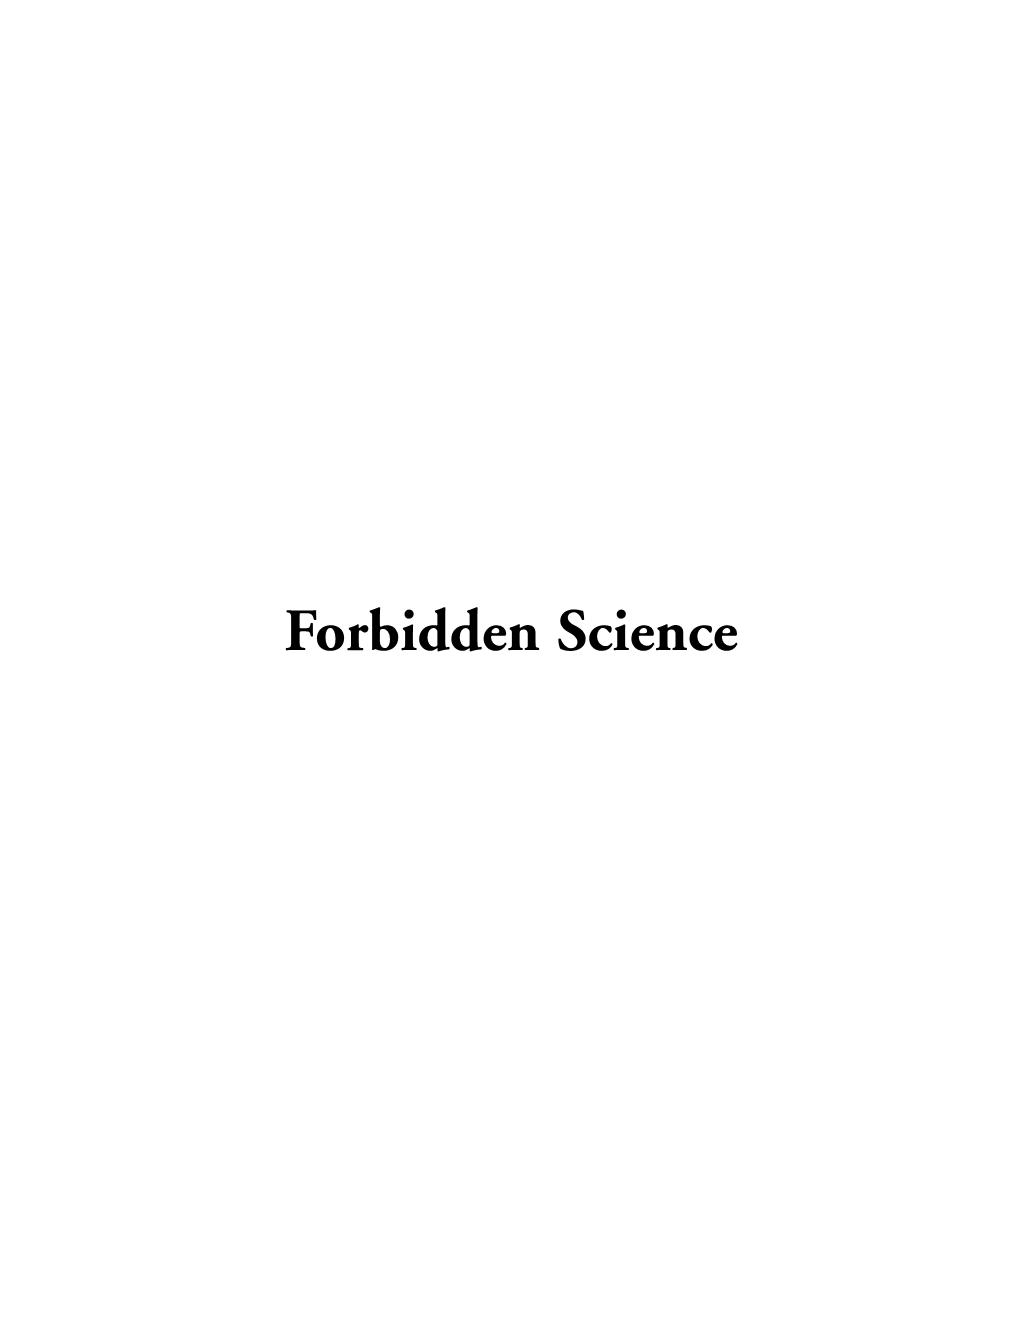 Forbidden Science Forbidden Science © Copyright 2003 by Ian C Baillie, Ph.D